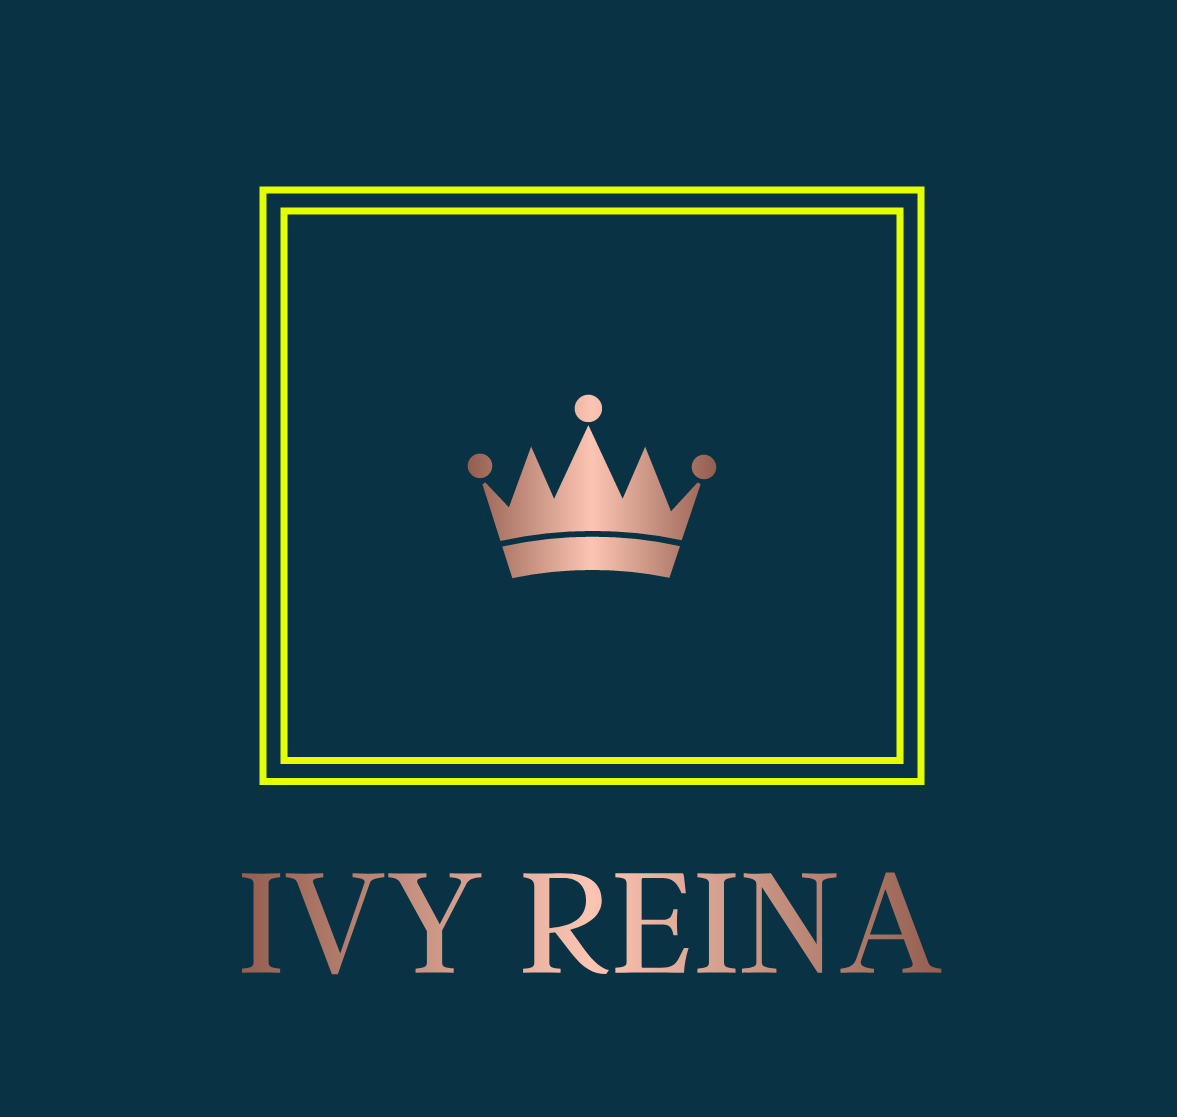 Ivy Reina